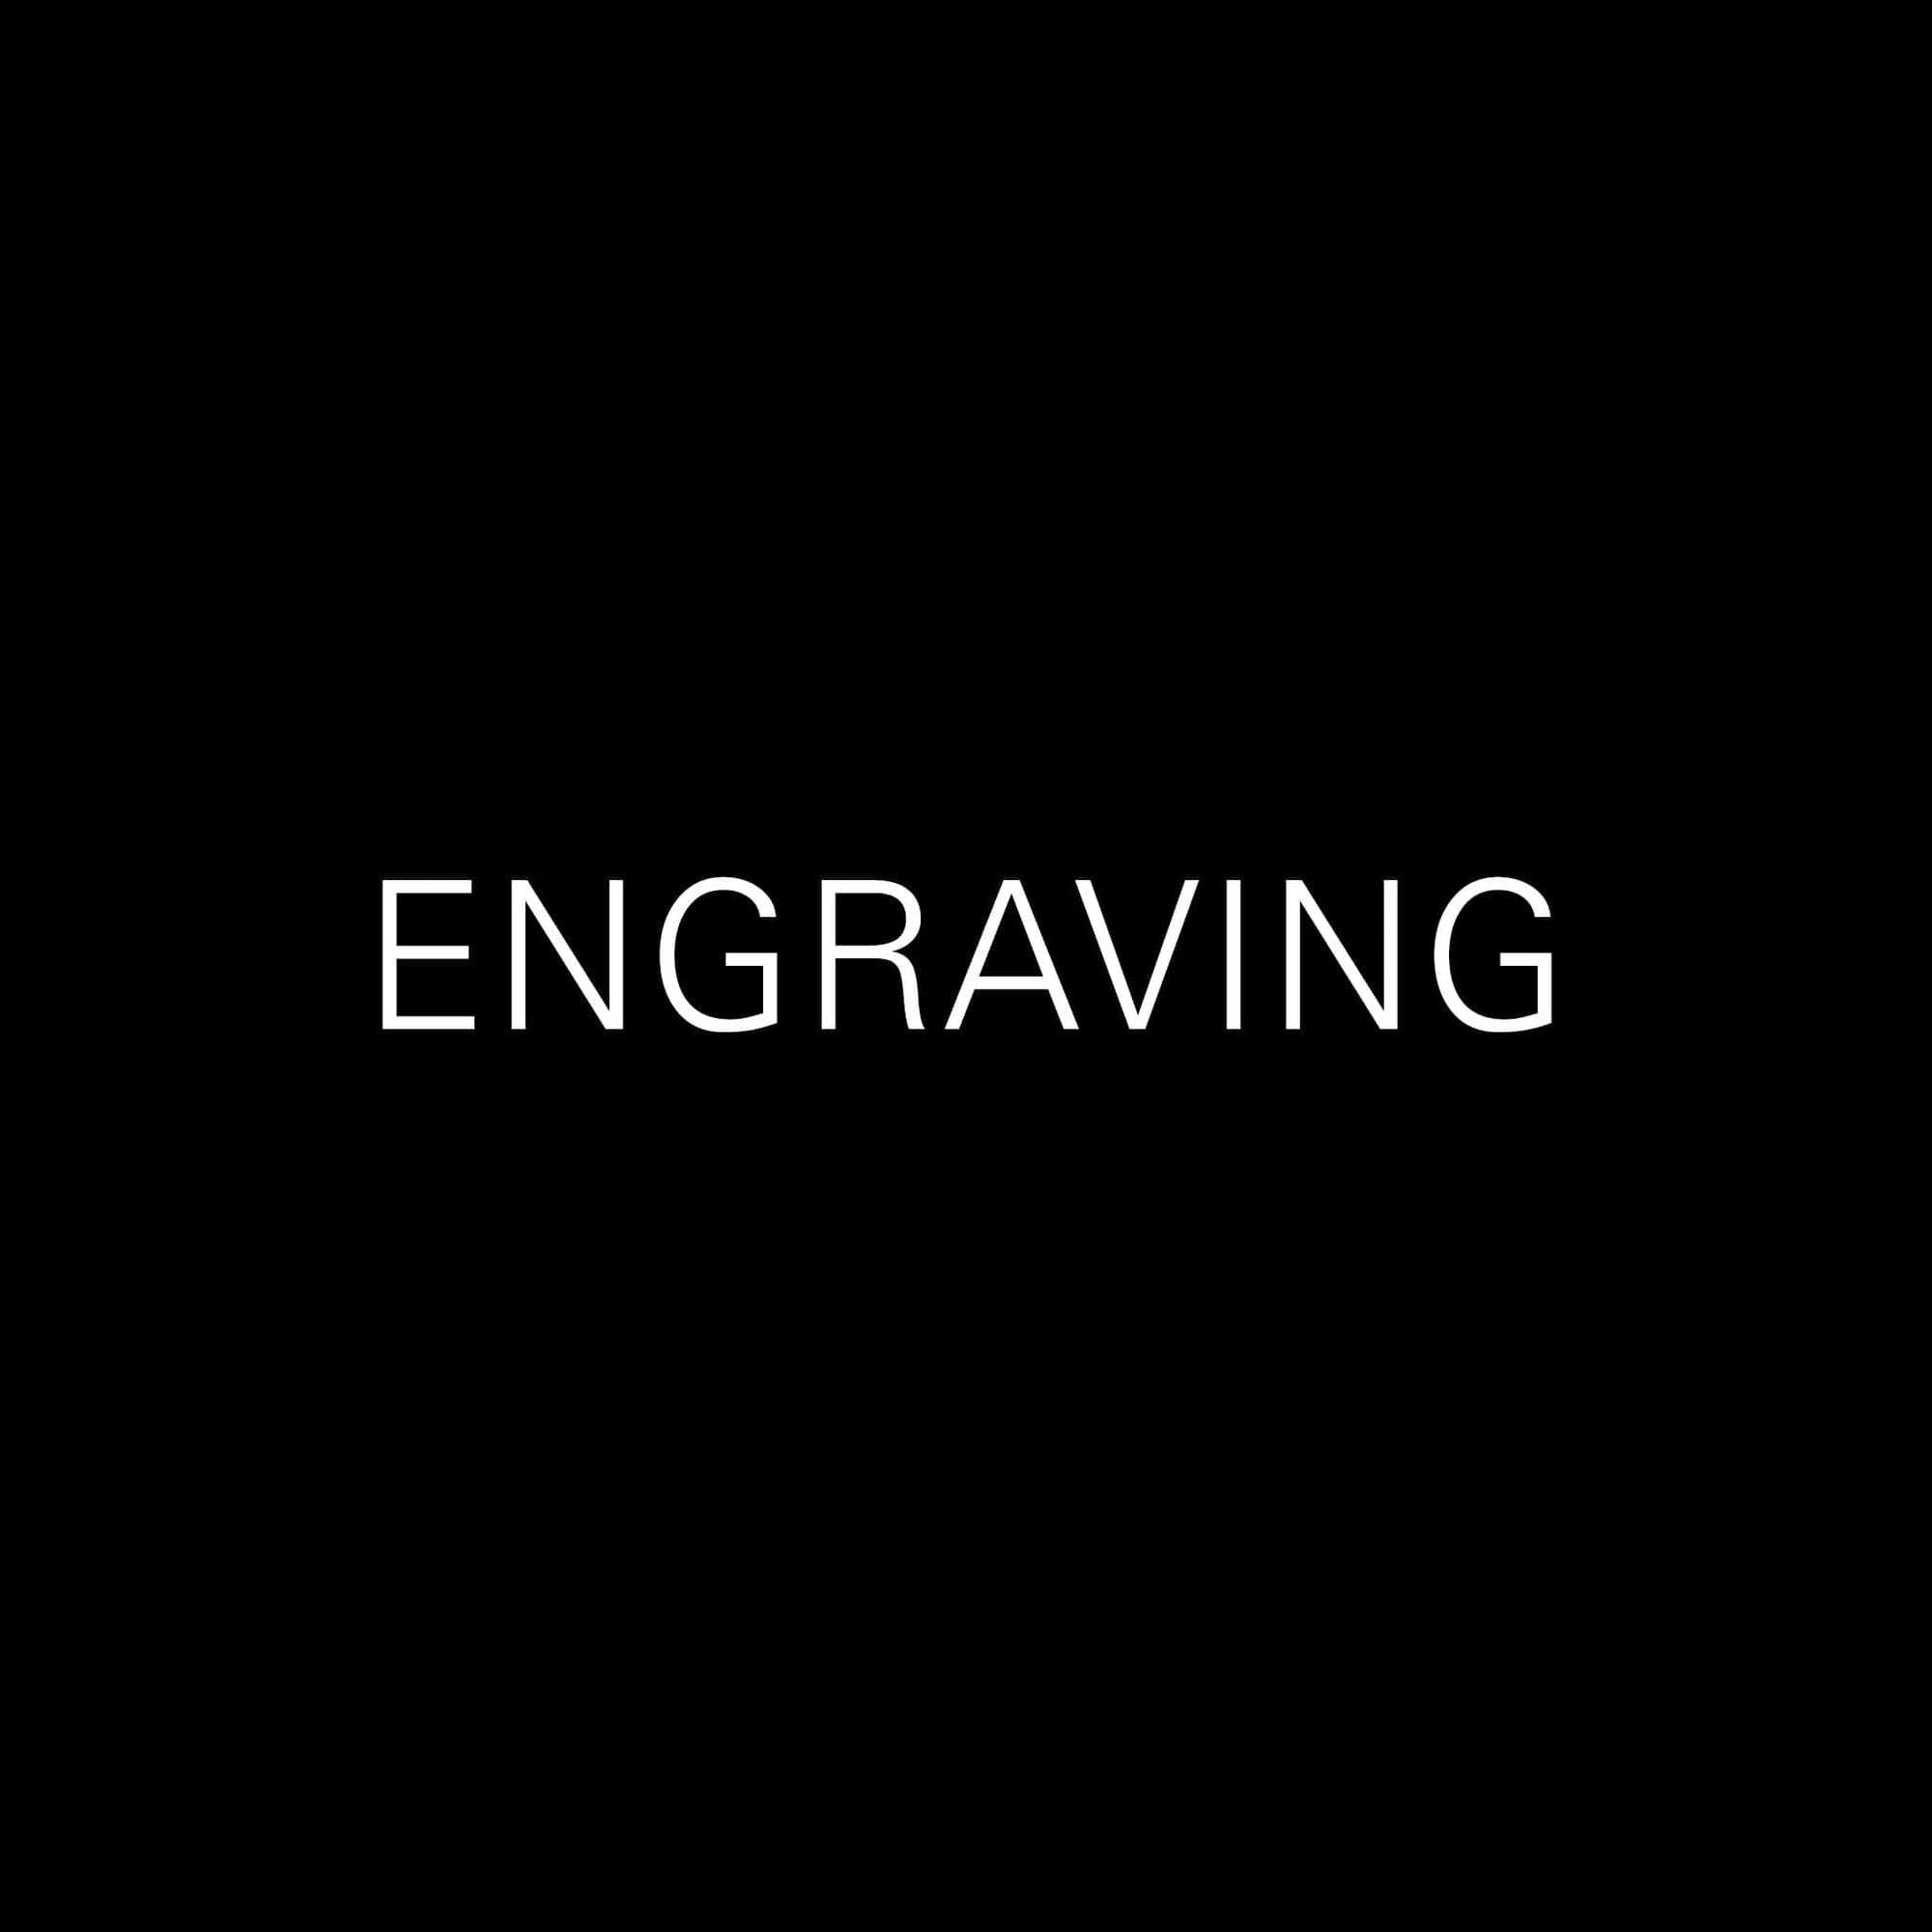 Engraving - 2 Items